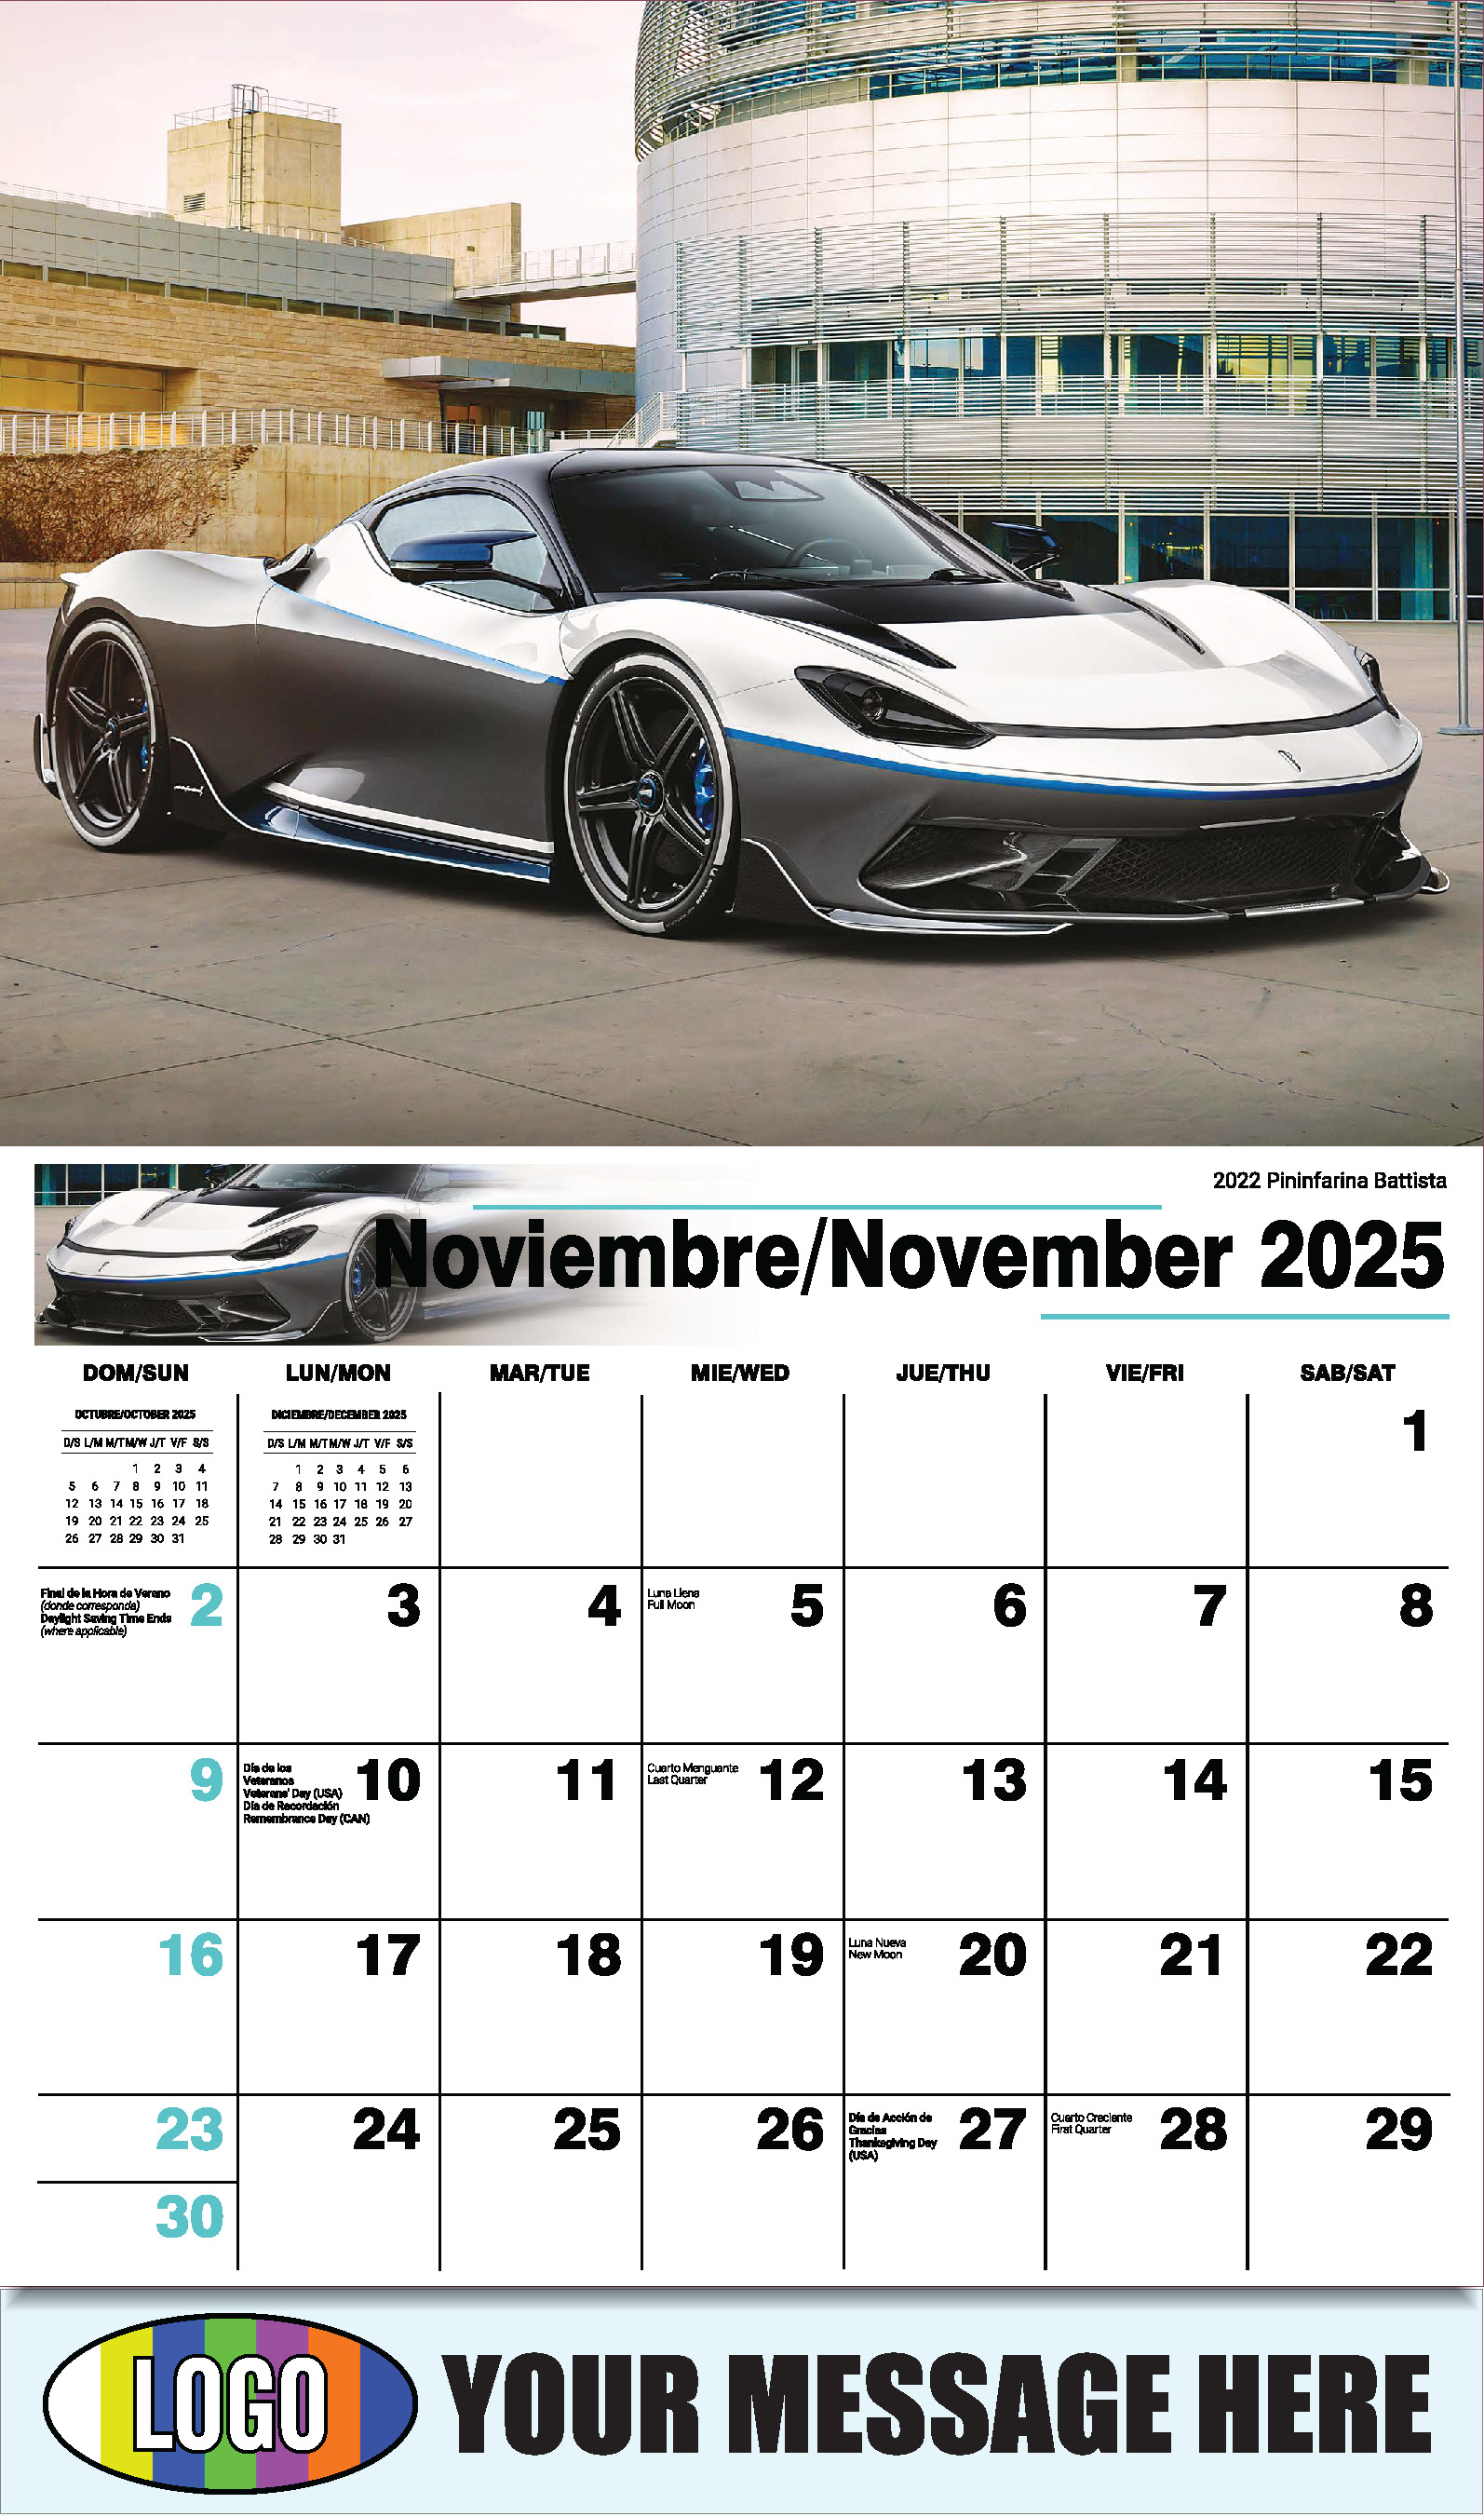 Exotic Cars 2025 Bilingual Automotive Business Promotional Calendar - November